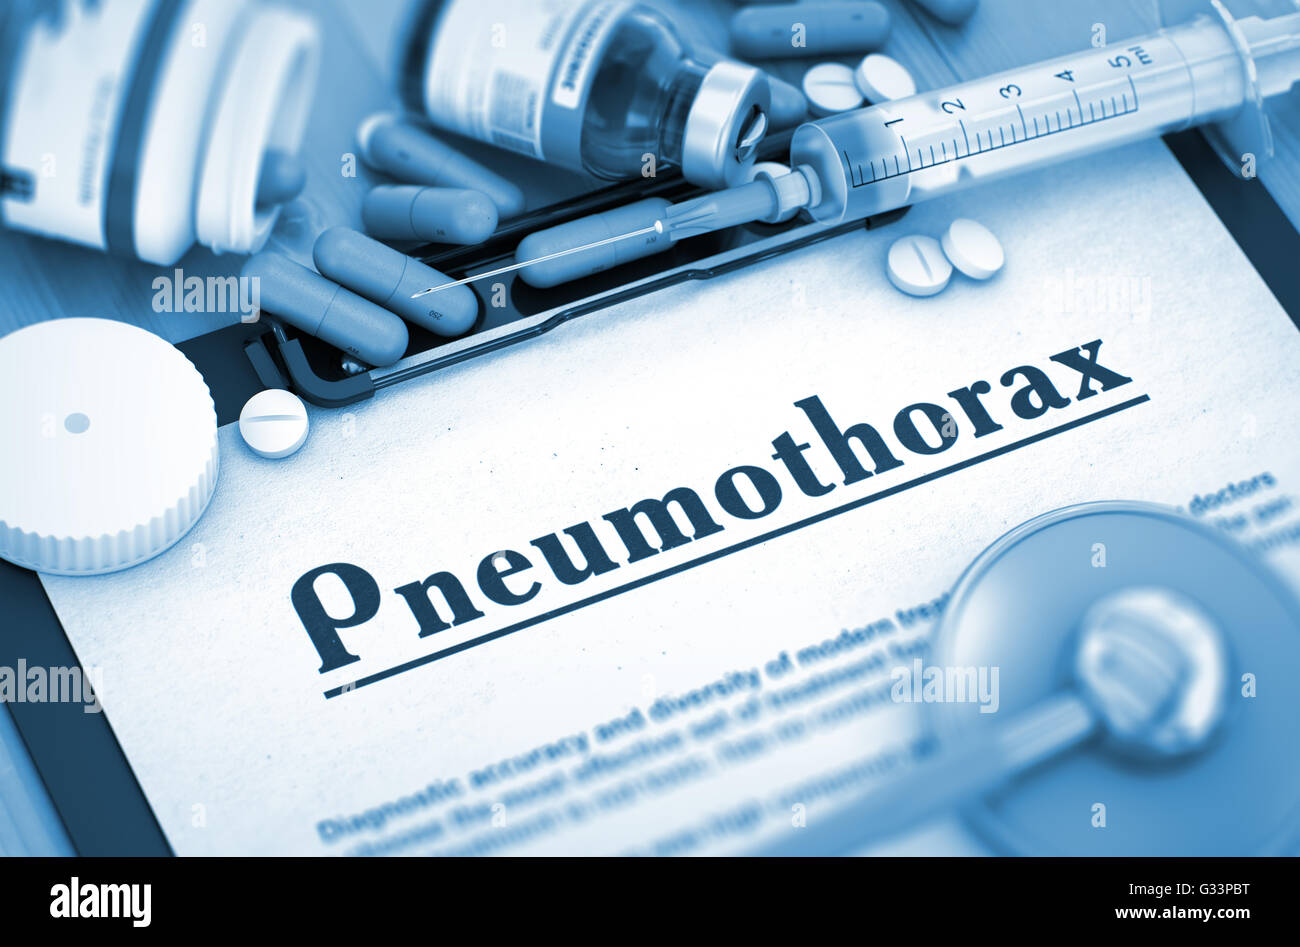 Pneumothorax Diagnosis. Medical Concept. Stock Photo